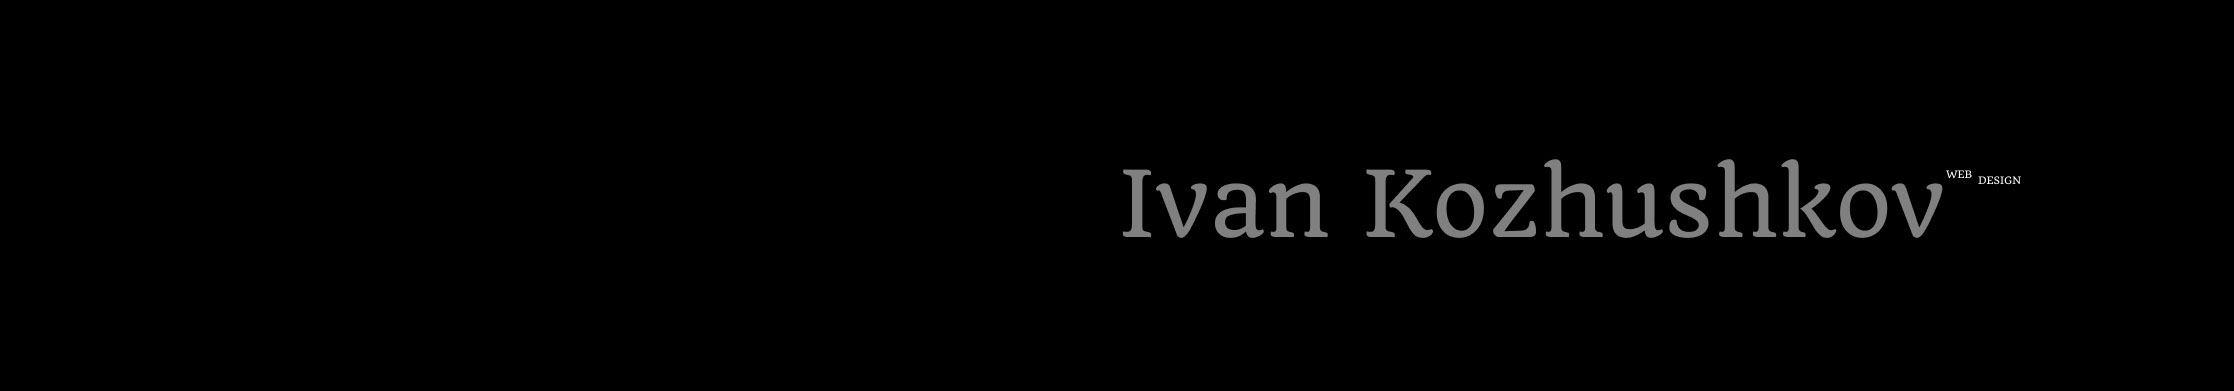 Bannière de profil de Ivan Kozhushkov